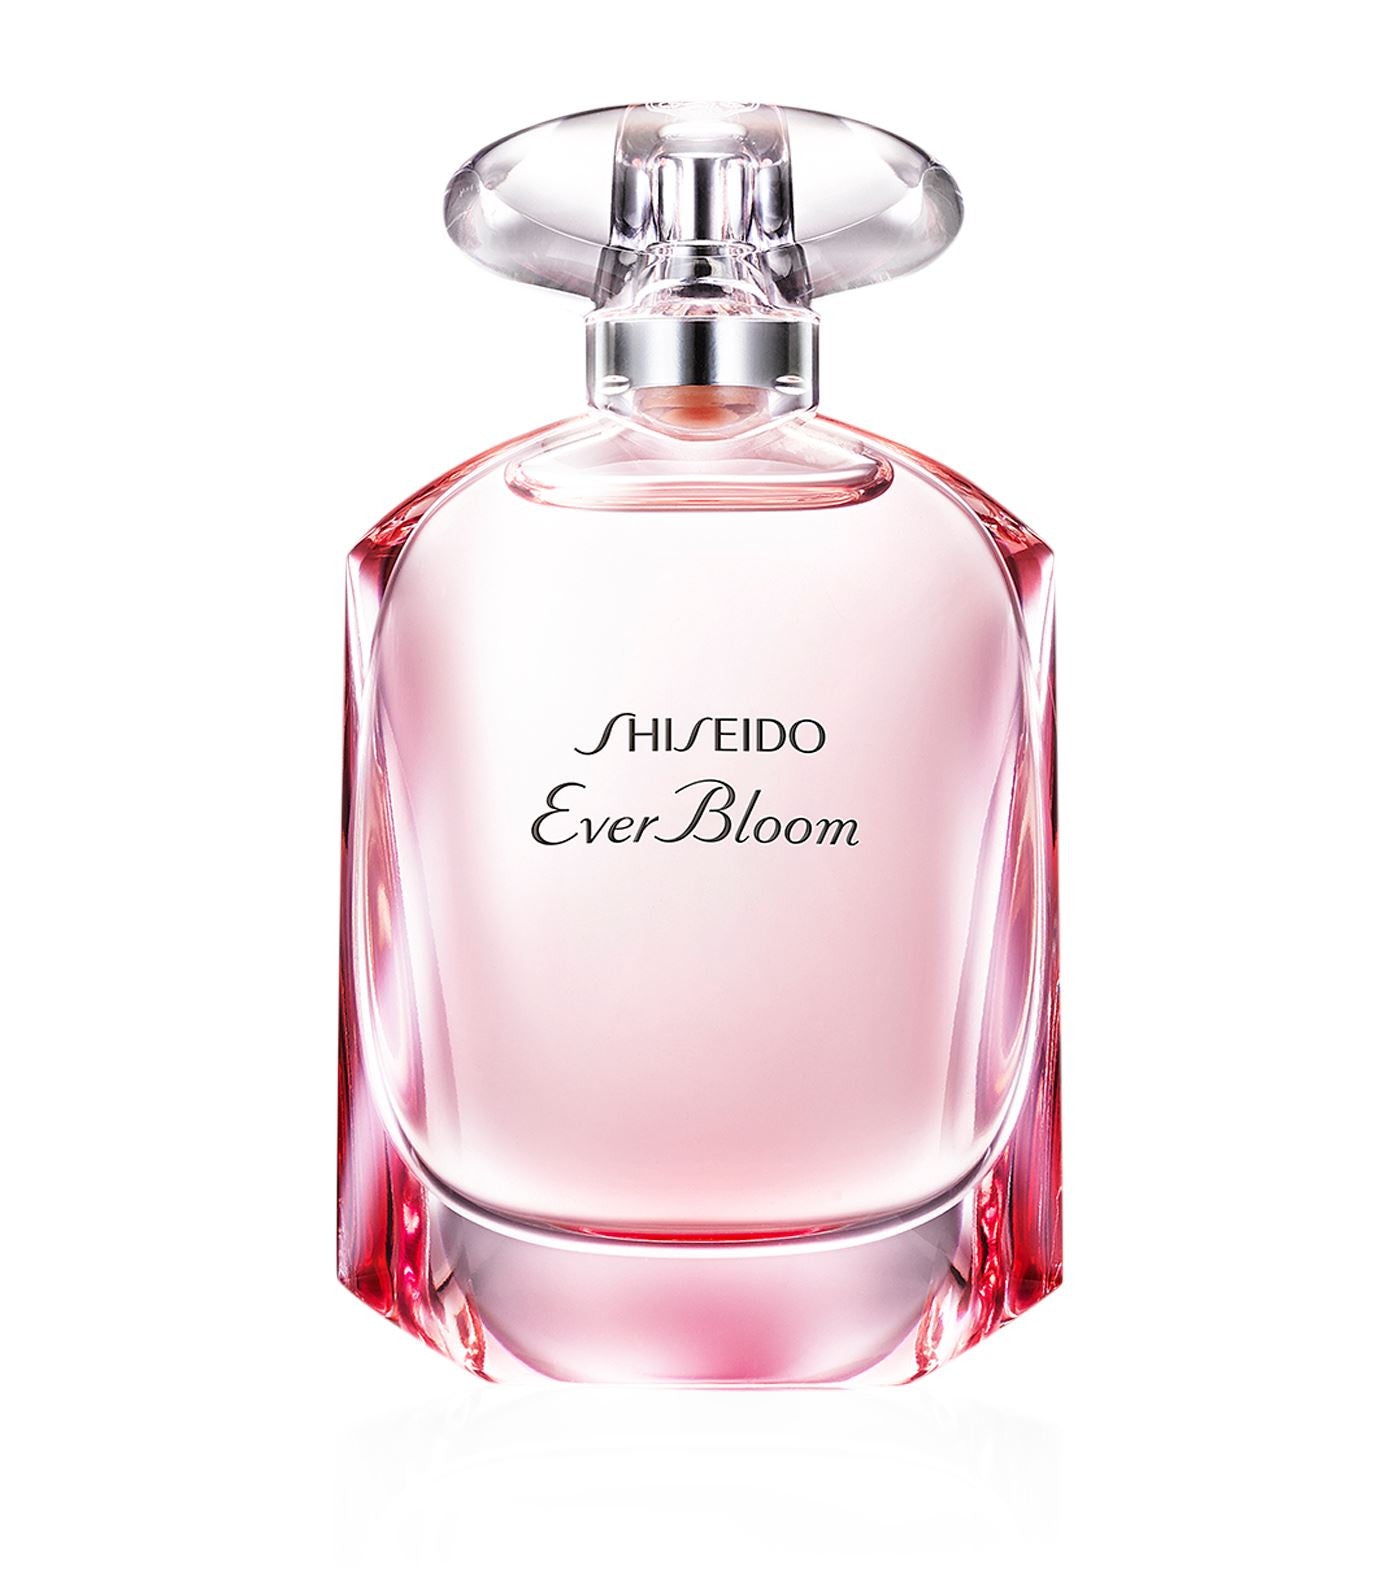 Shiseido Ever Bloom 90ml Eau de Parfum